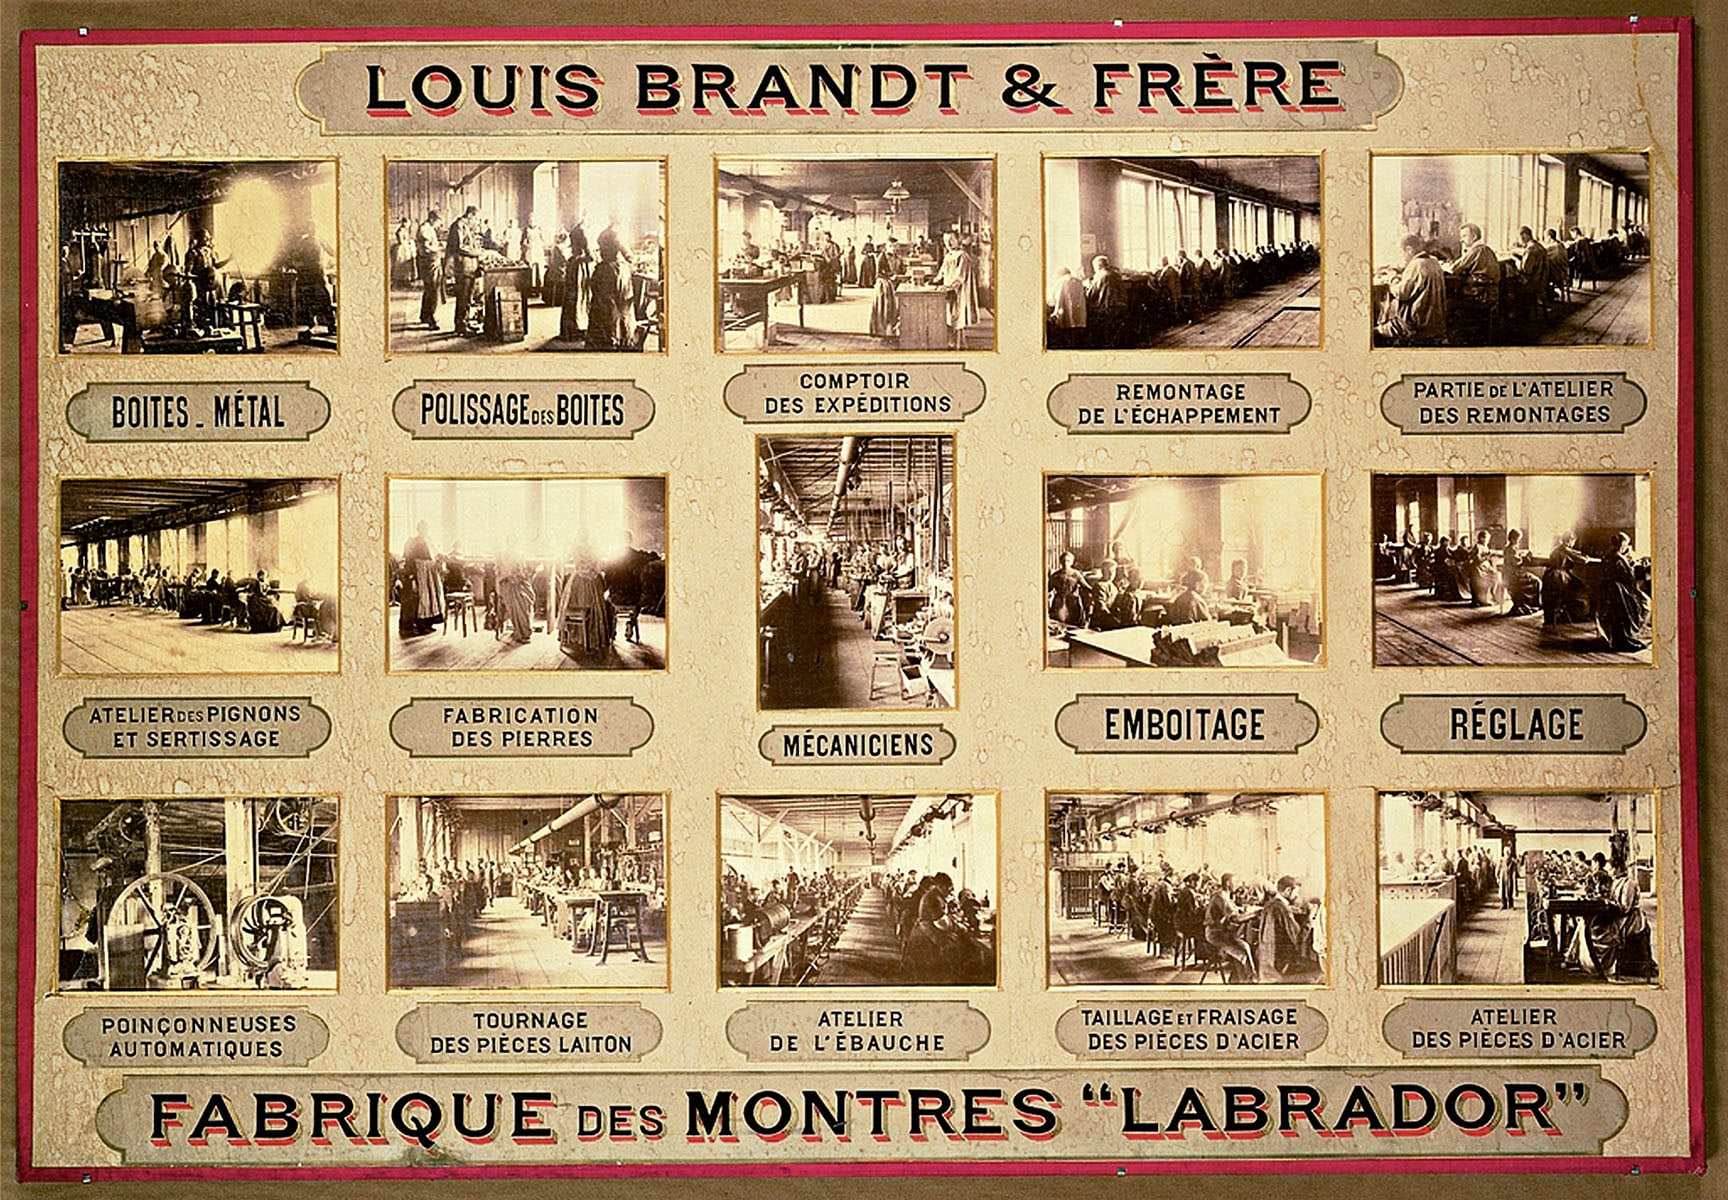 Serial production of Louis Brandt & Fils calibres